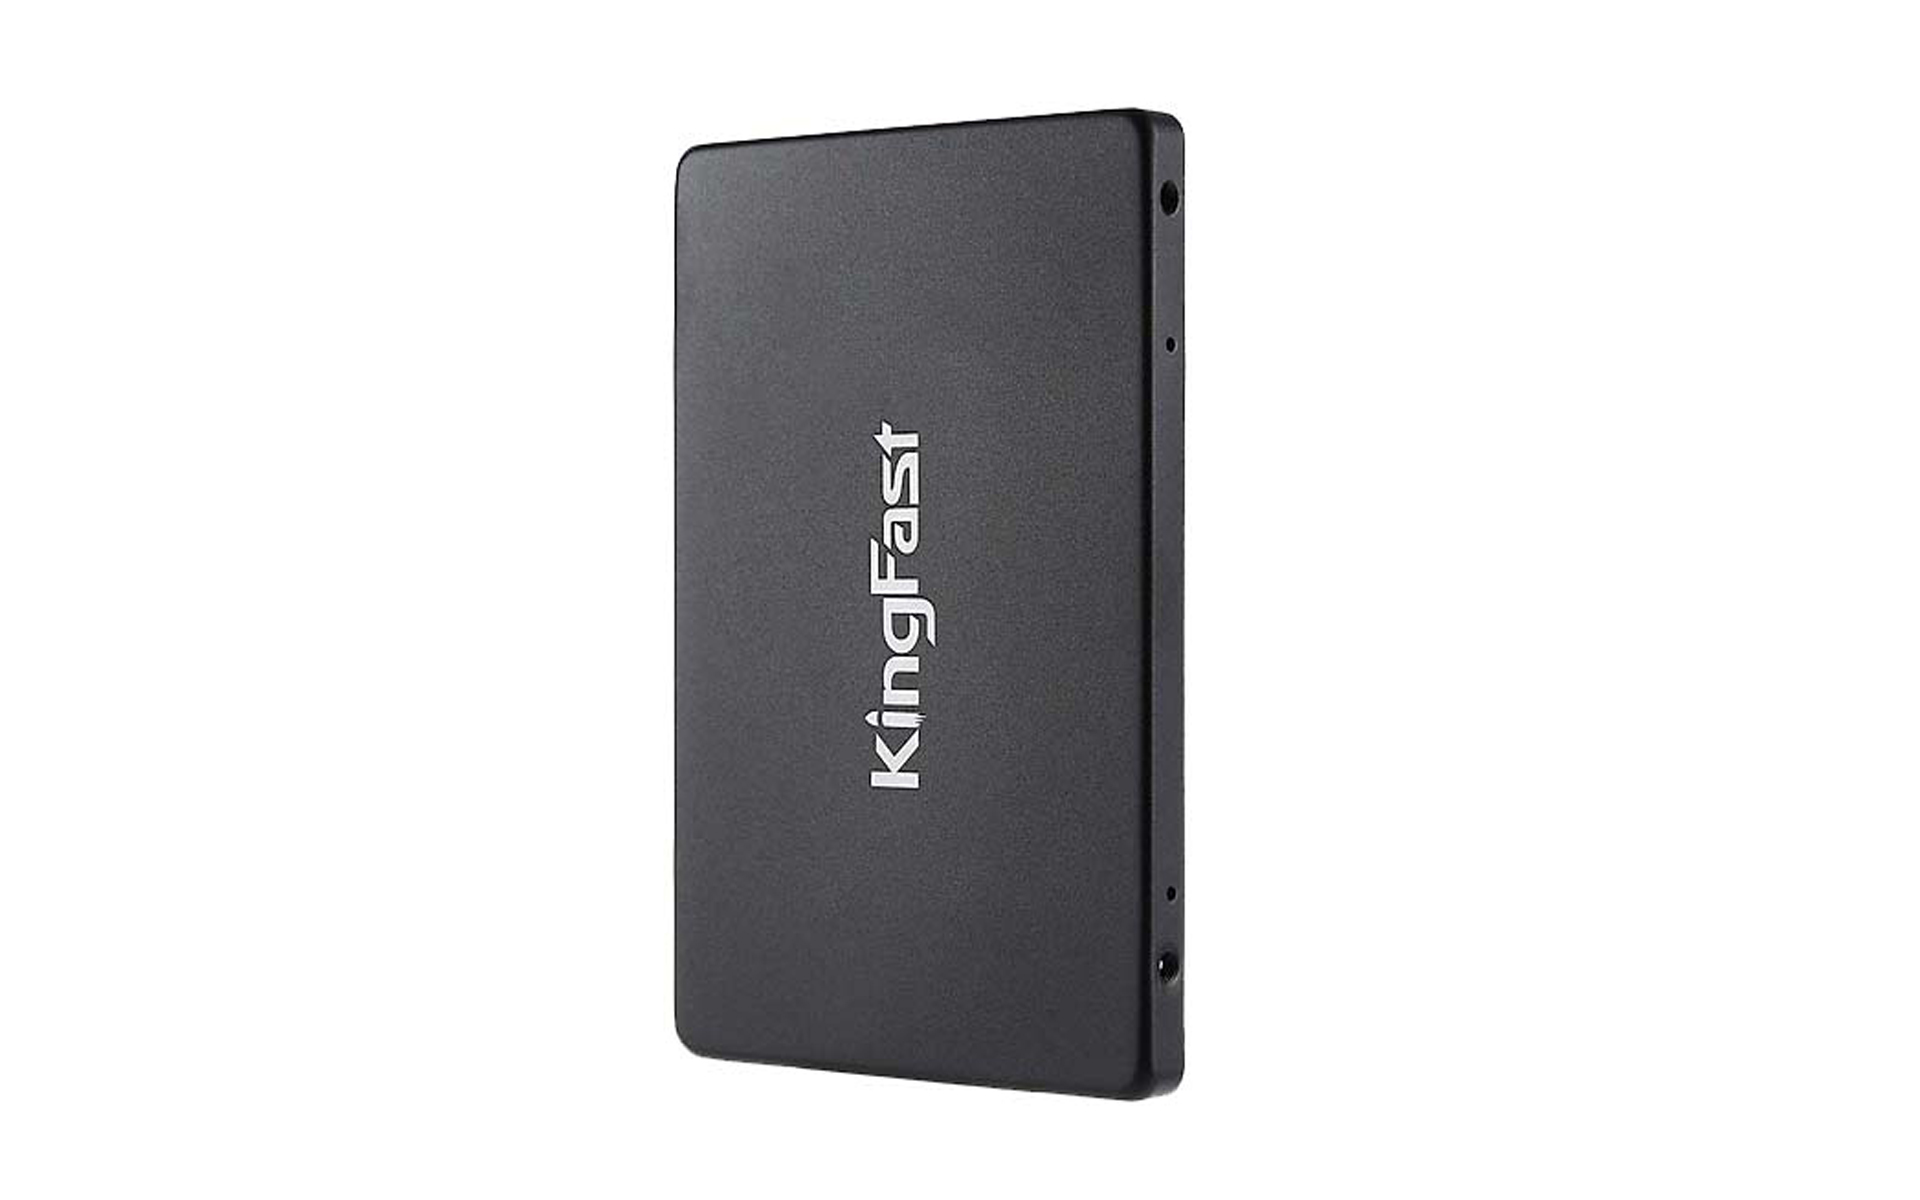 SSD Kingfast F6 Pro 480GB 2.5 inch SATA3 - hoạt động mạnh mẽ